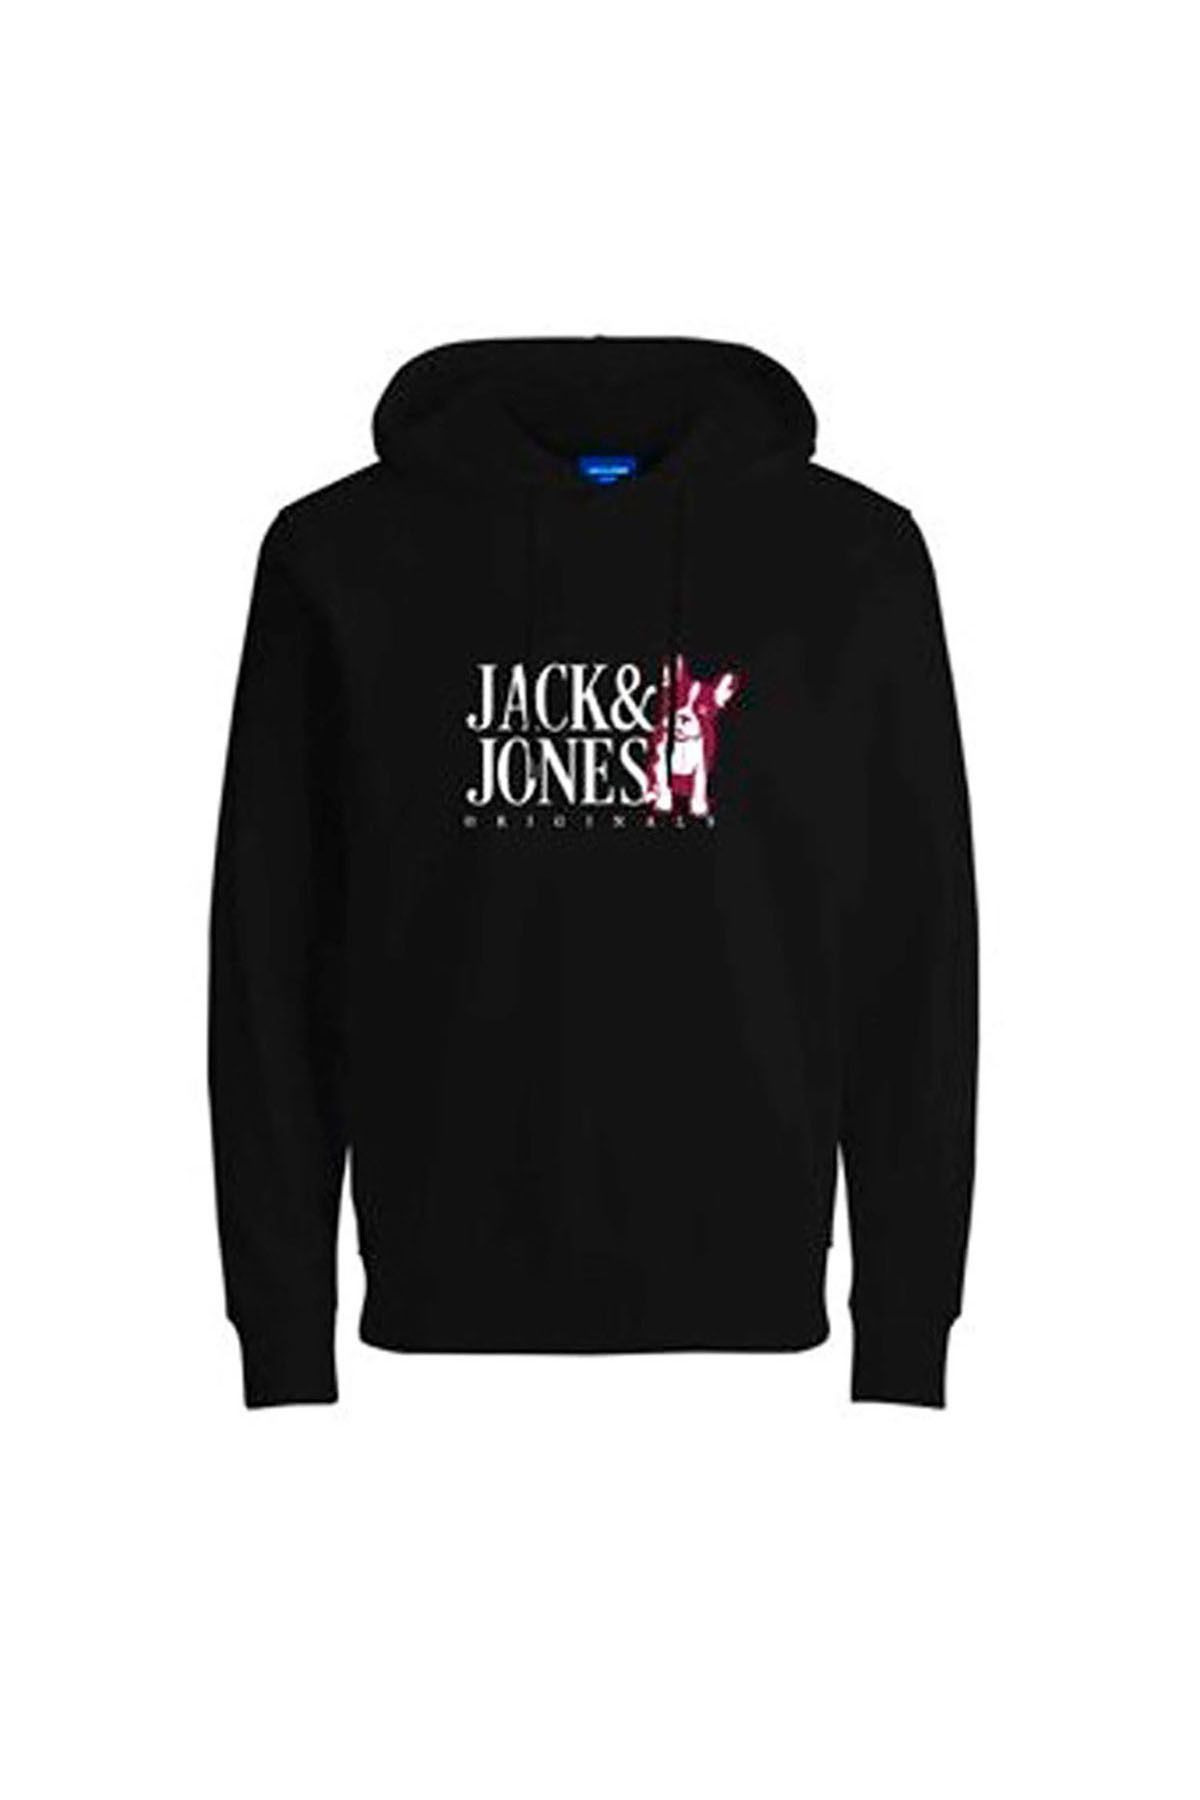 Jack & Jones Erkek Kapşonlu Sweatshirt 12244219